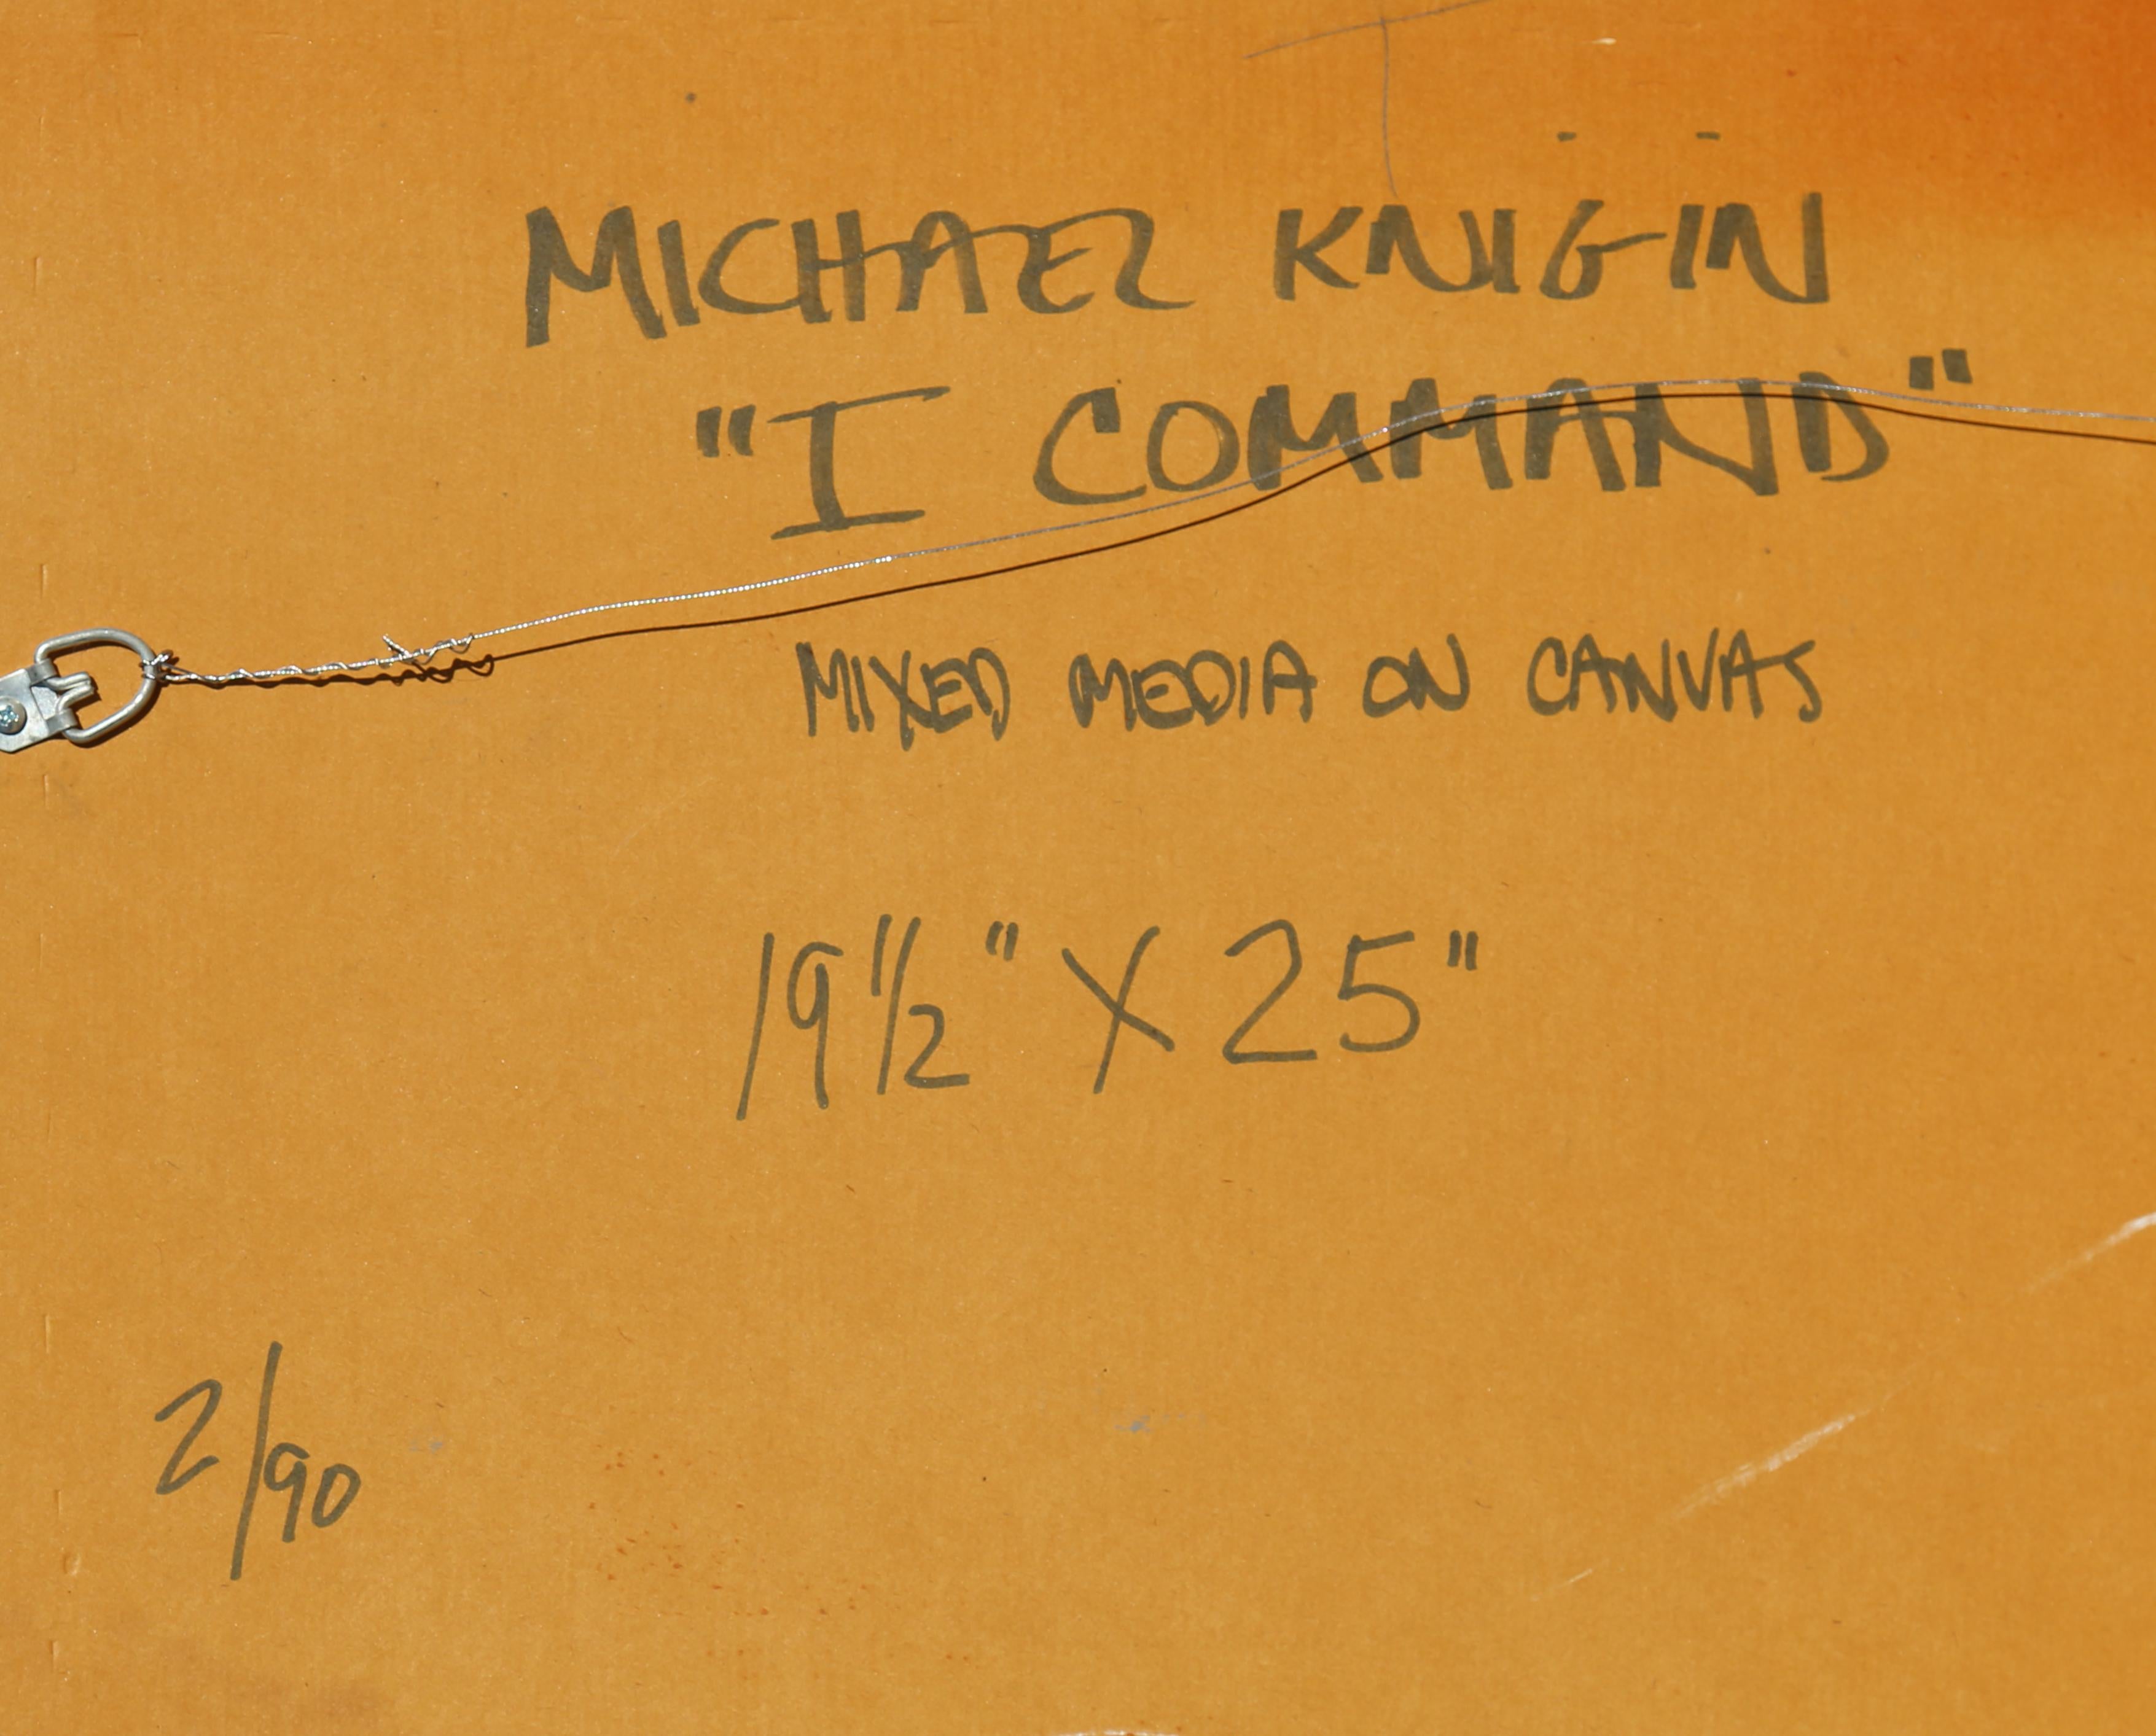 I Command - Print by Michael Knigin